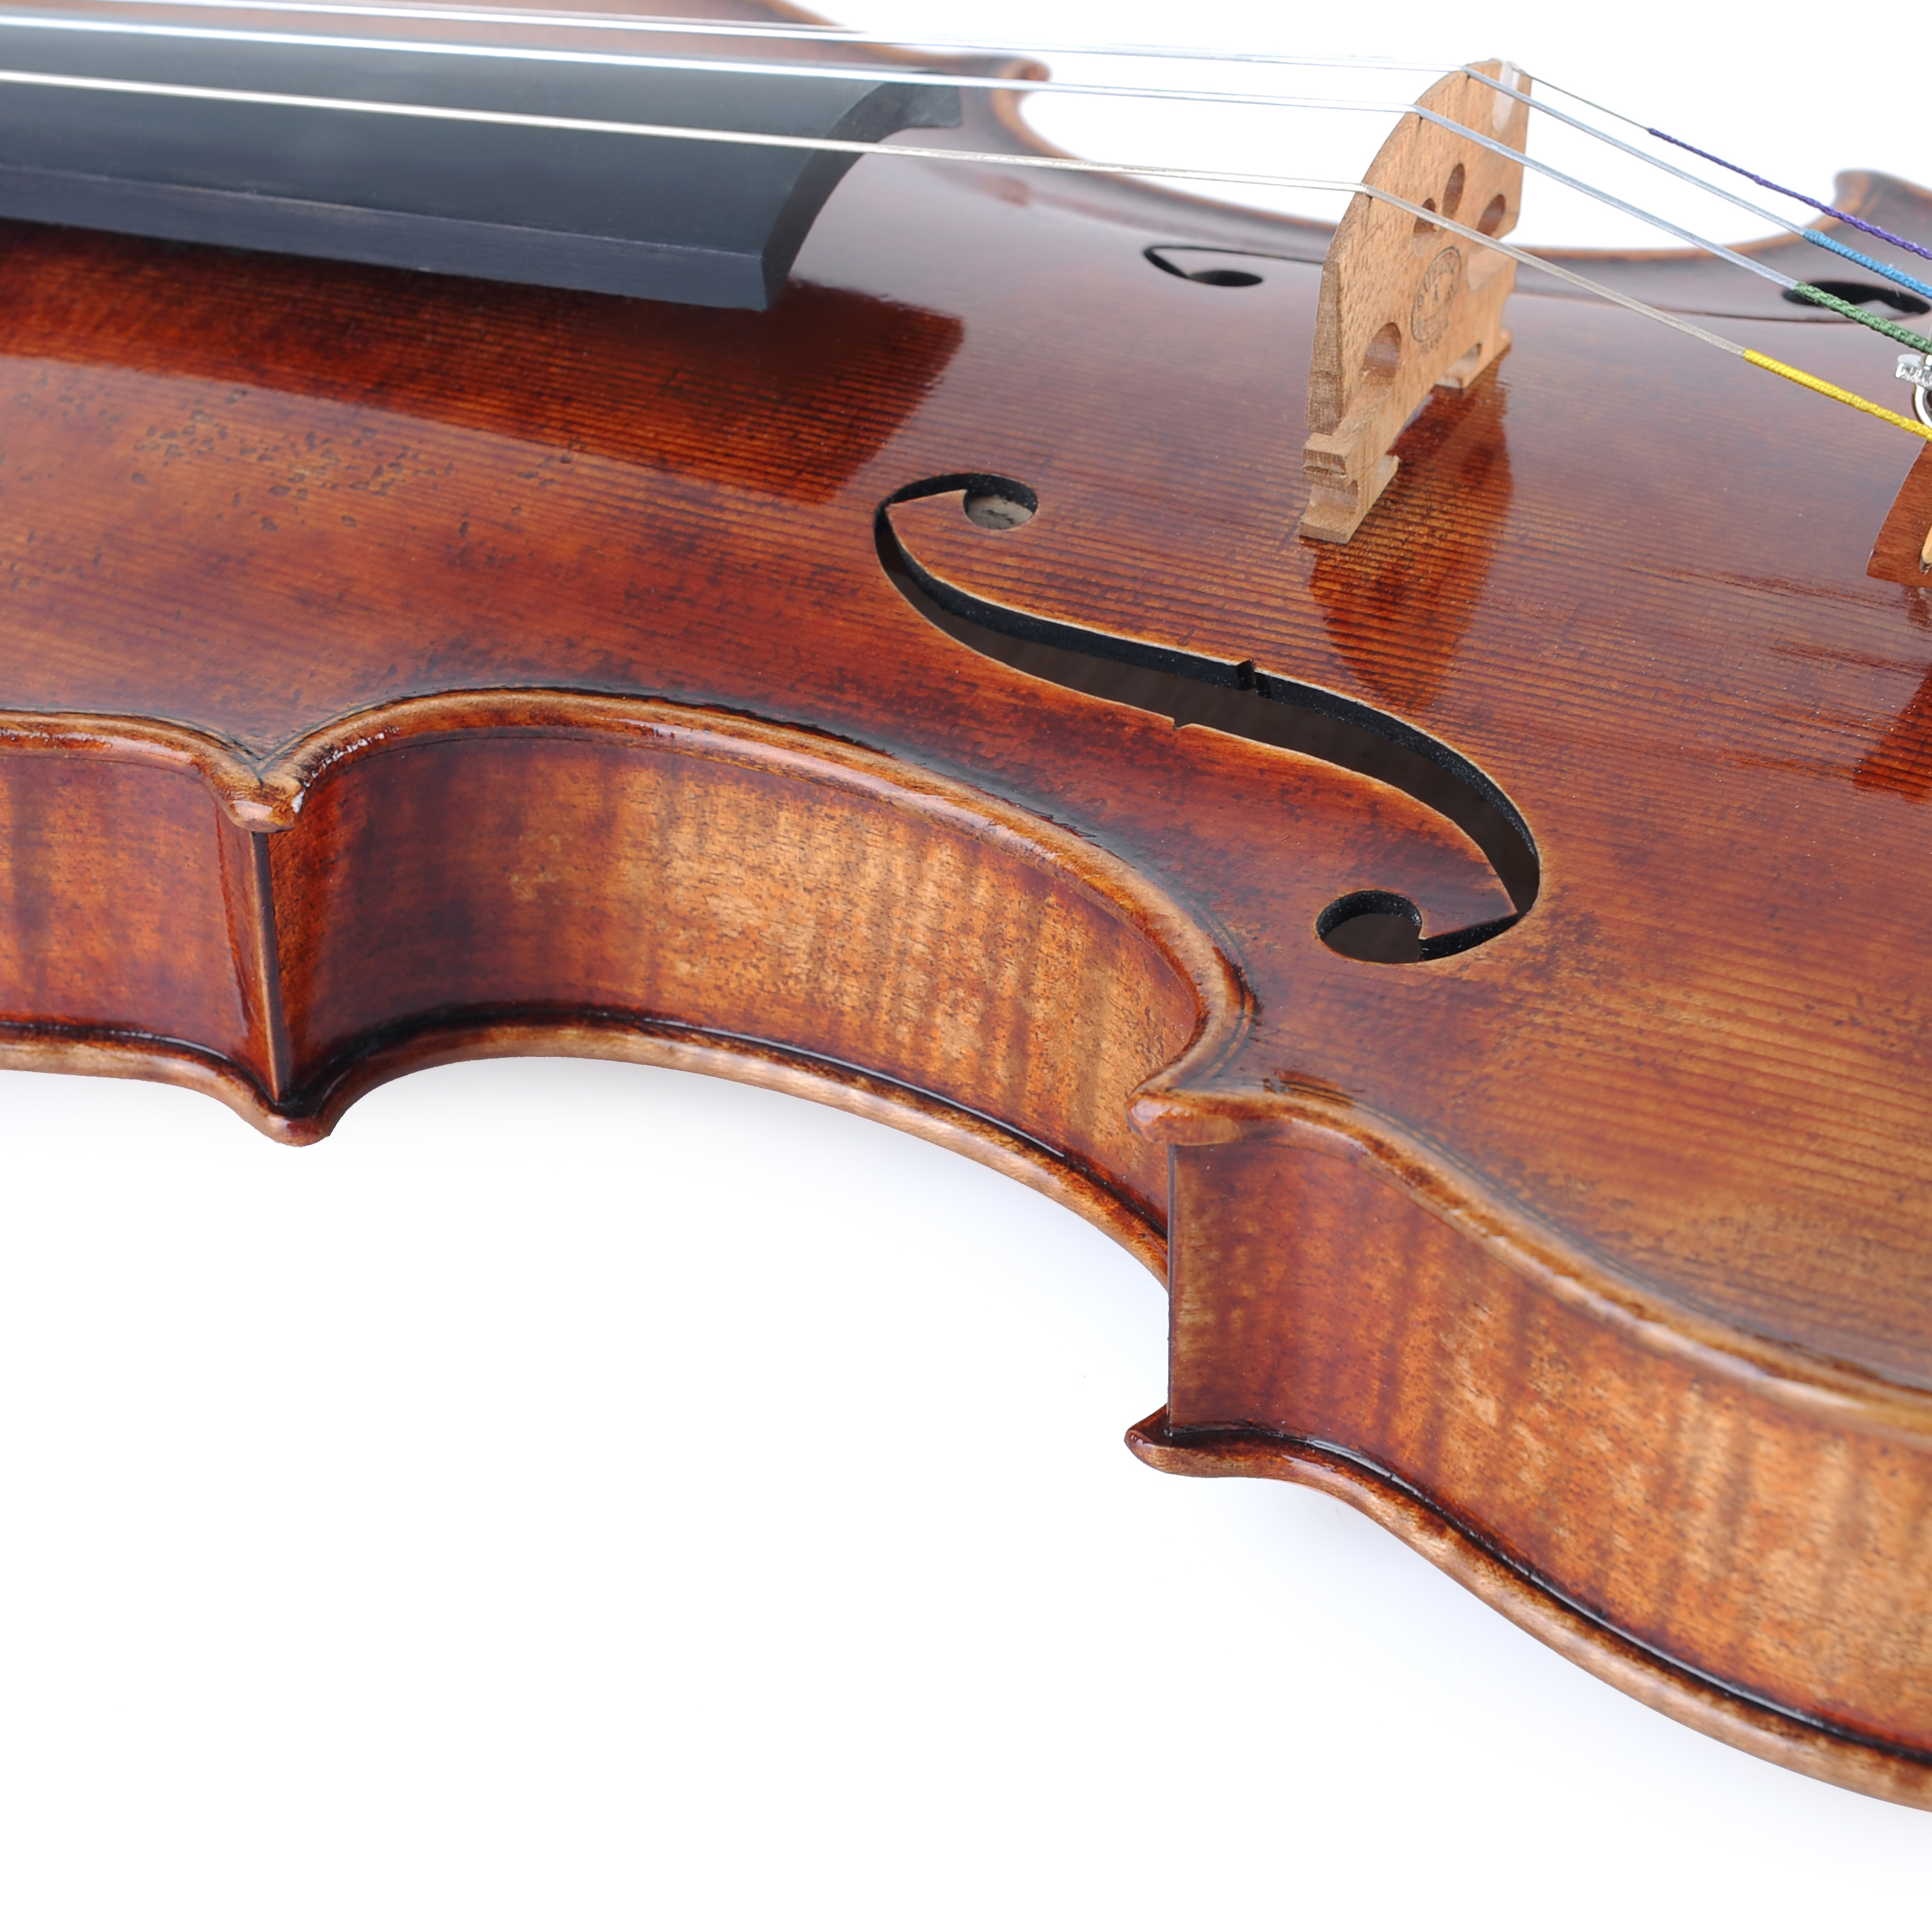 4/4 materiales europeos violín arce flameado violín chino de alta calidad (VH600EM)